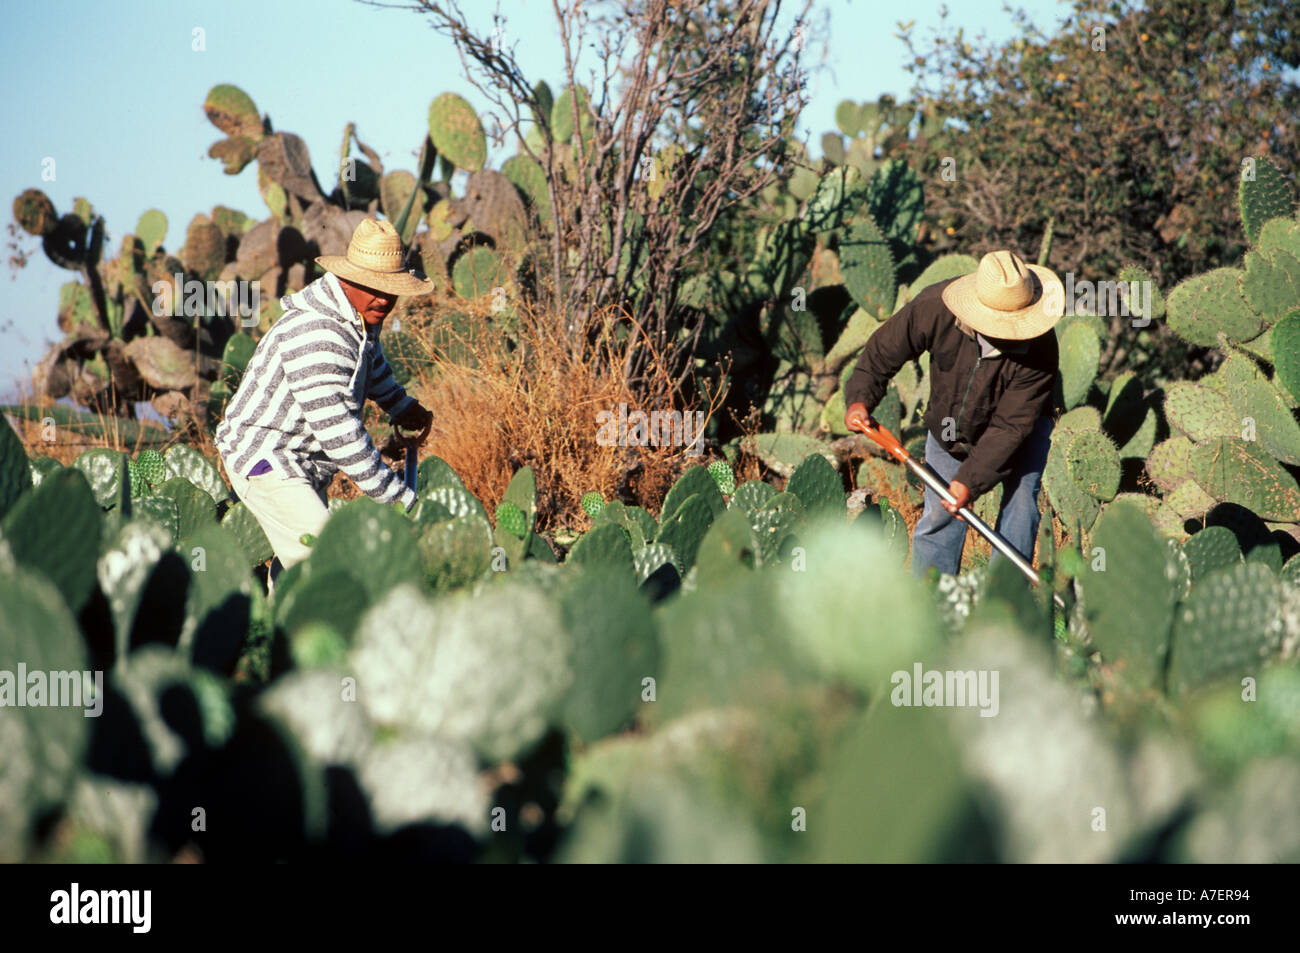 Mexiko, Puebla, San Sebastian Villanueva. Carbio, Arbeiter auf einem Familienbauernhof Reinigung Felder des Nopal. Stockfoto